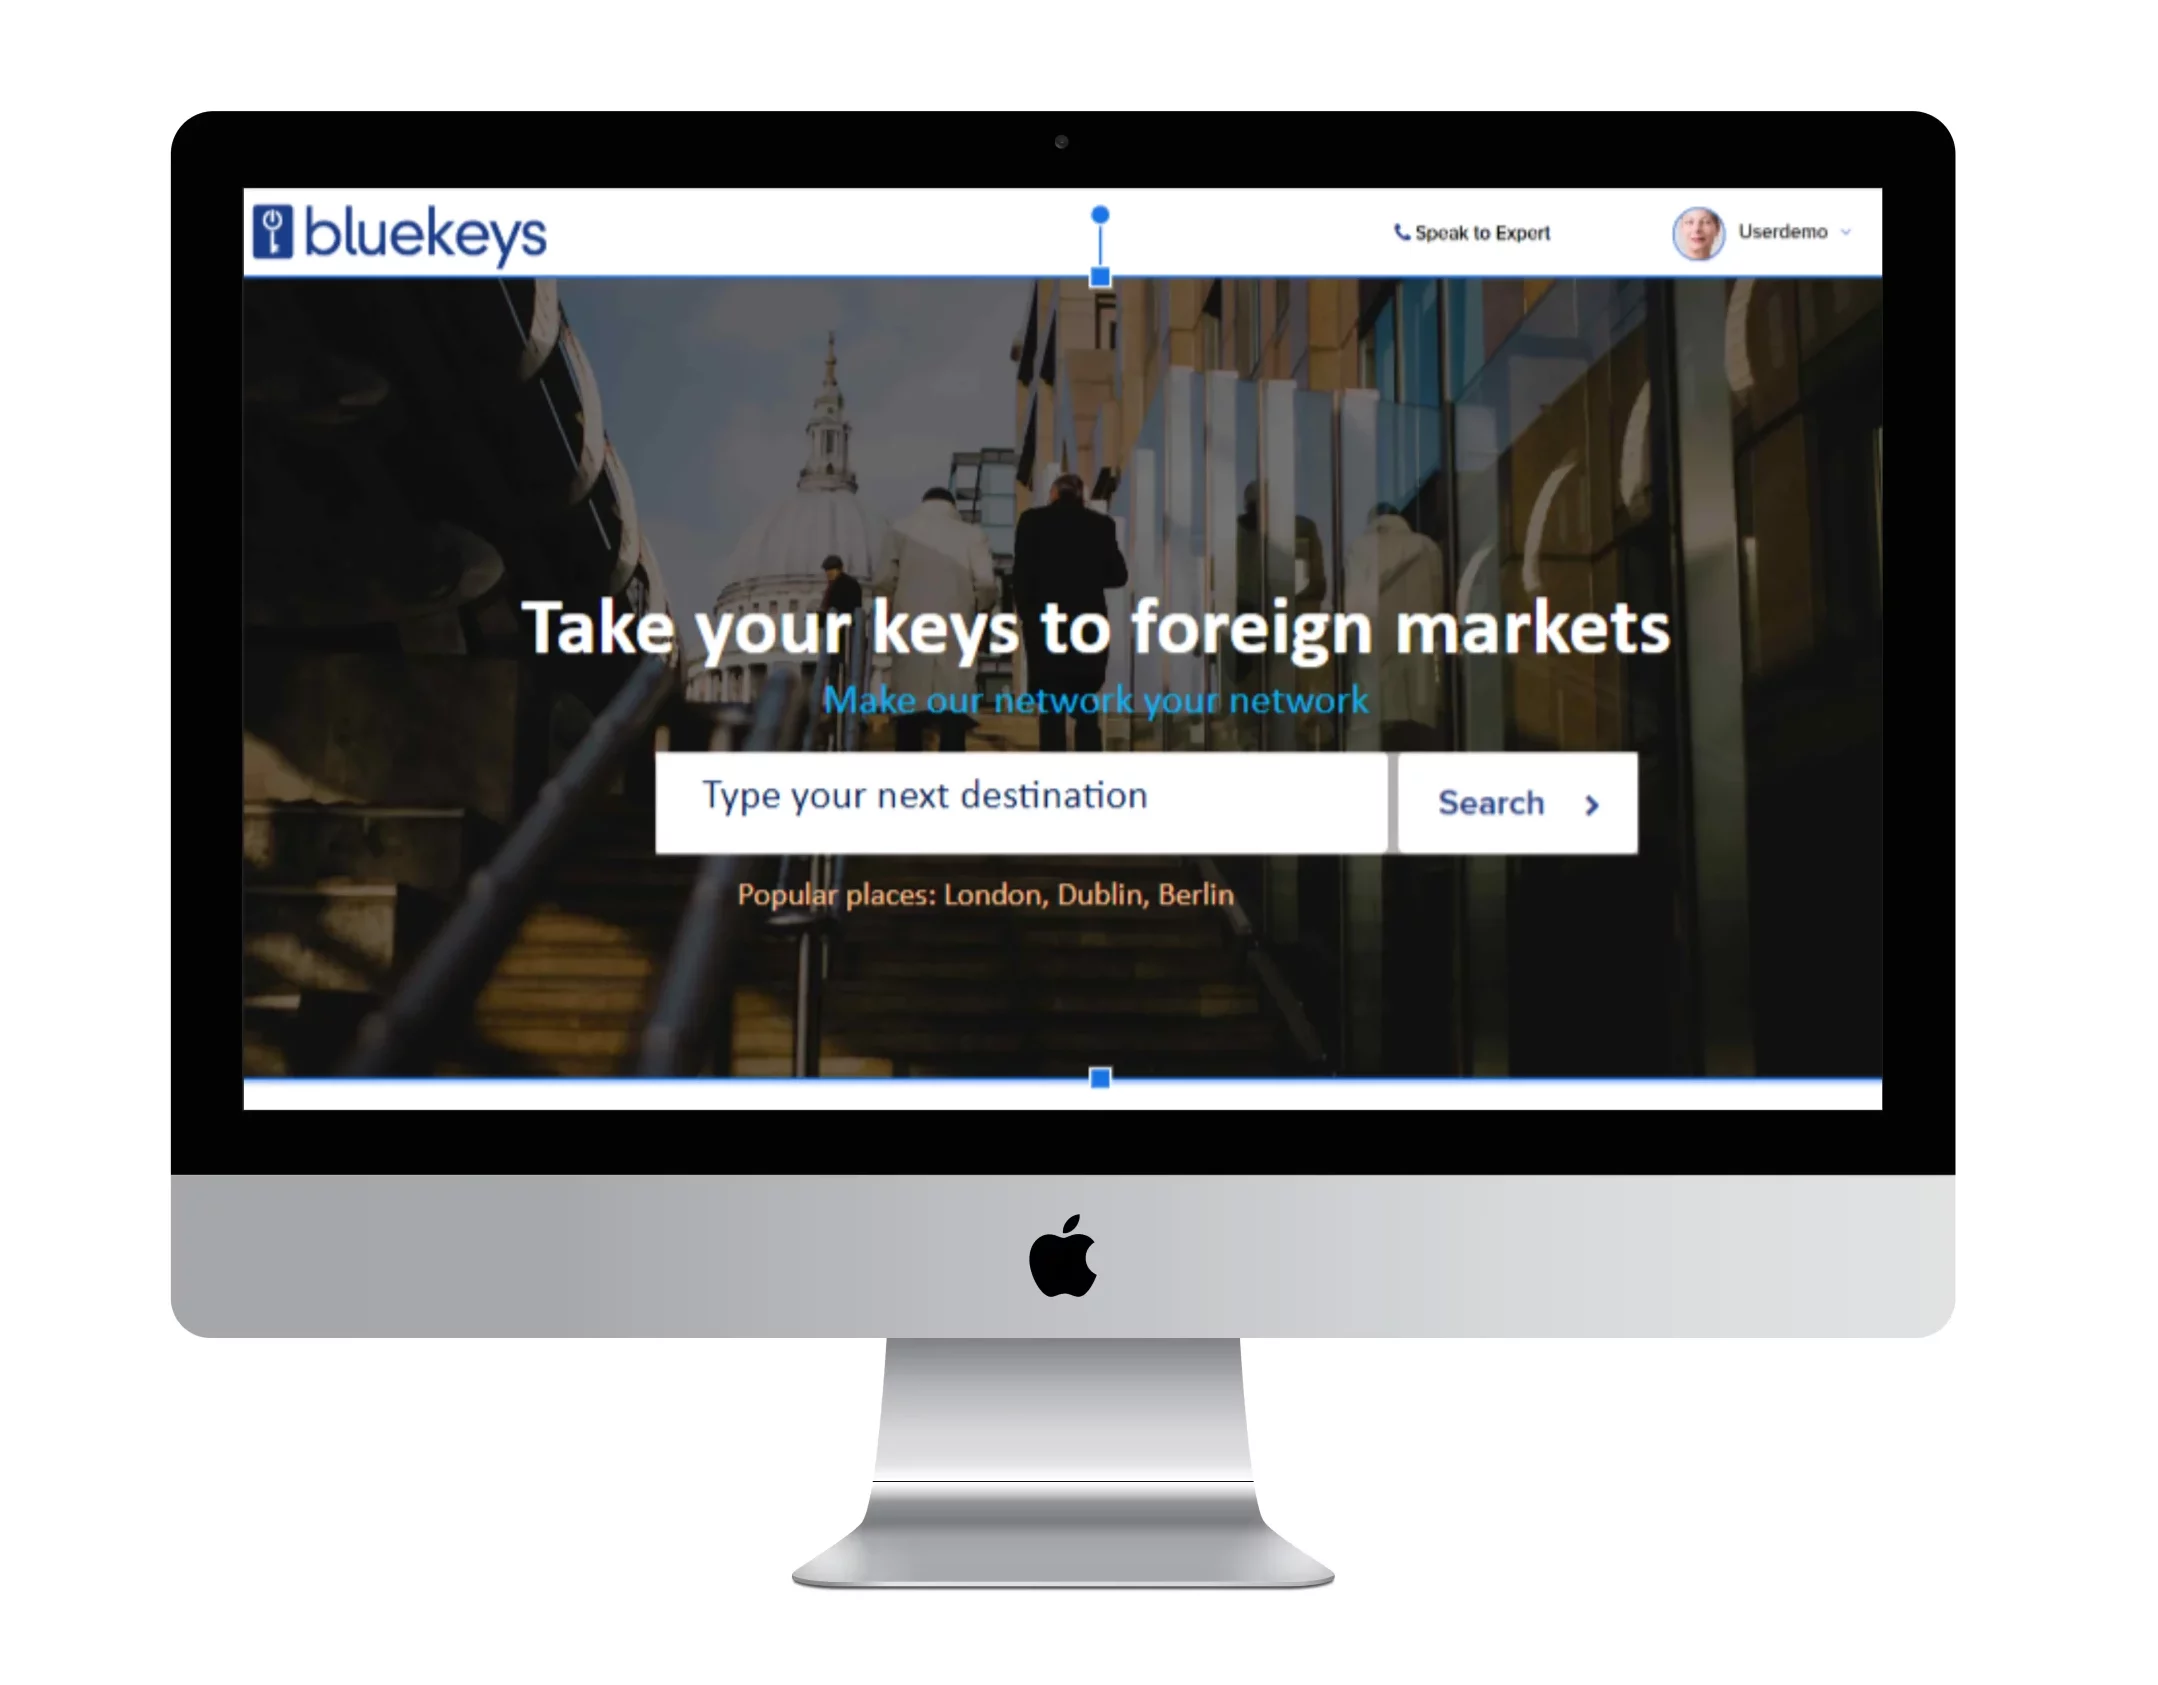 Portfolio image displaying the user interface of the BlueKeys app.